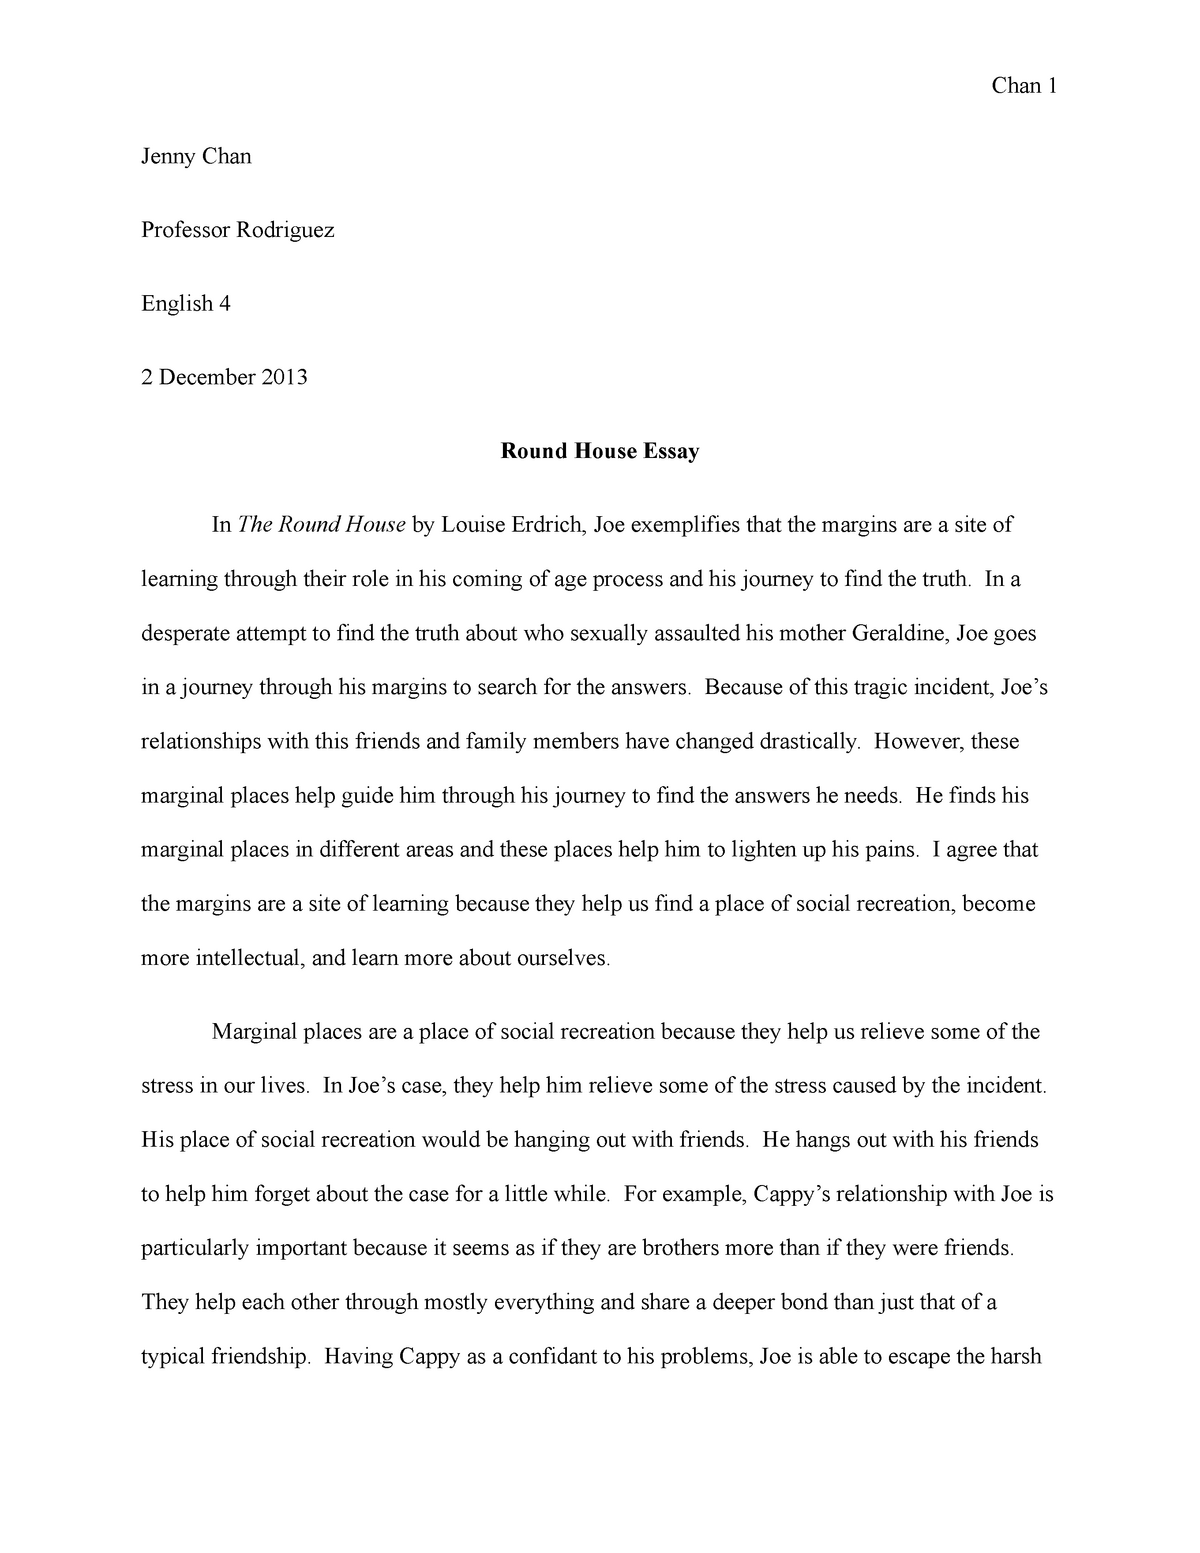 Round House Essay - ENGL 21L - English Writing - UC Riverside